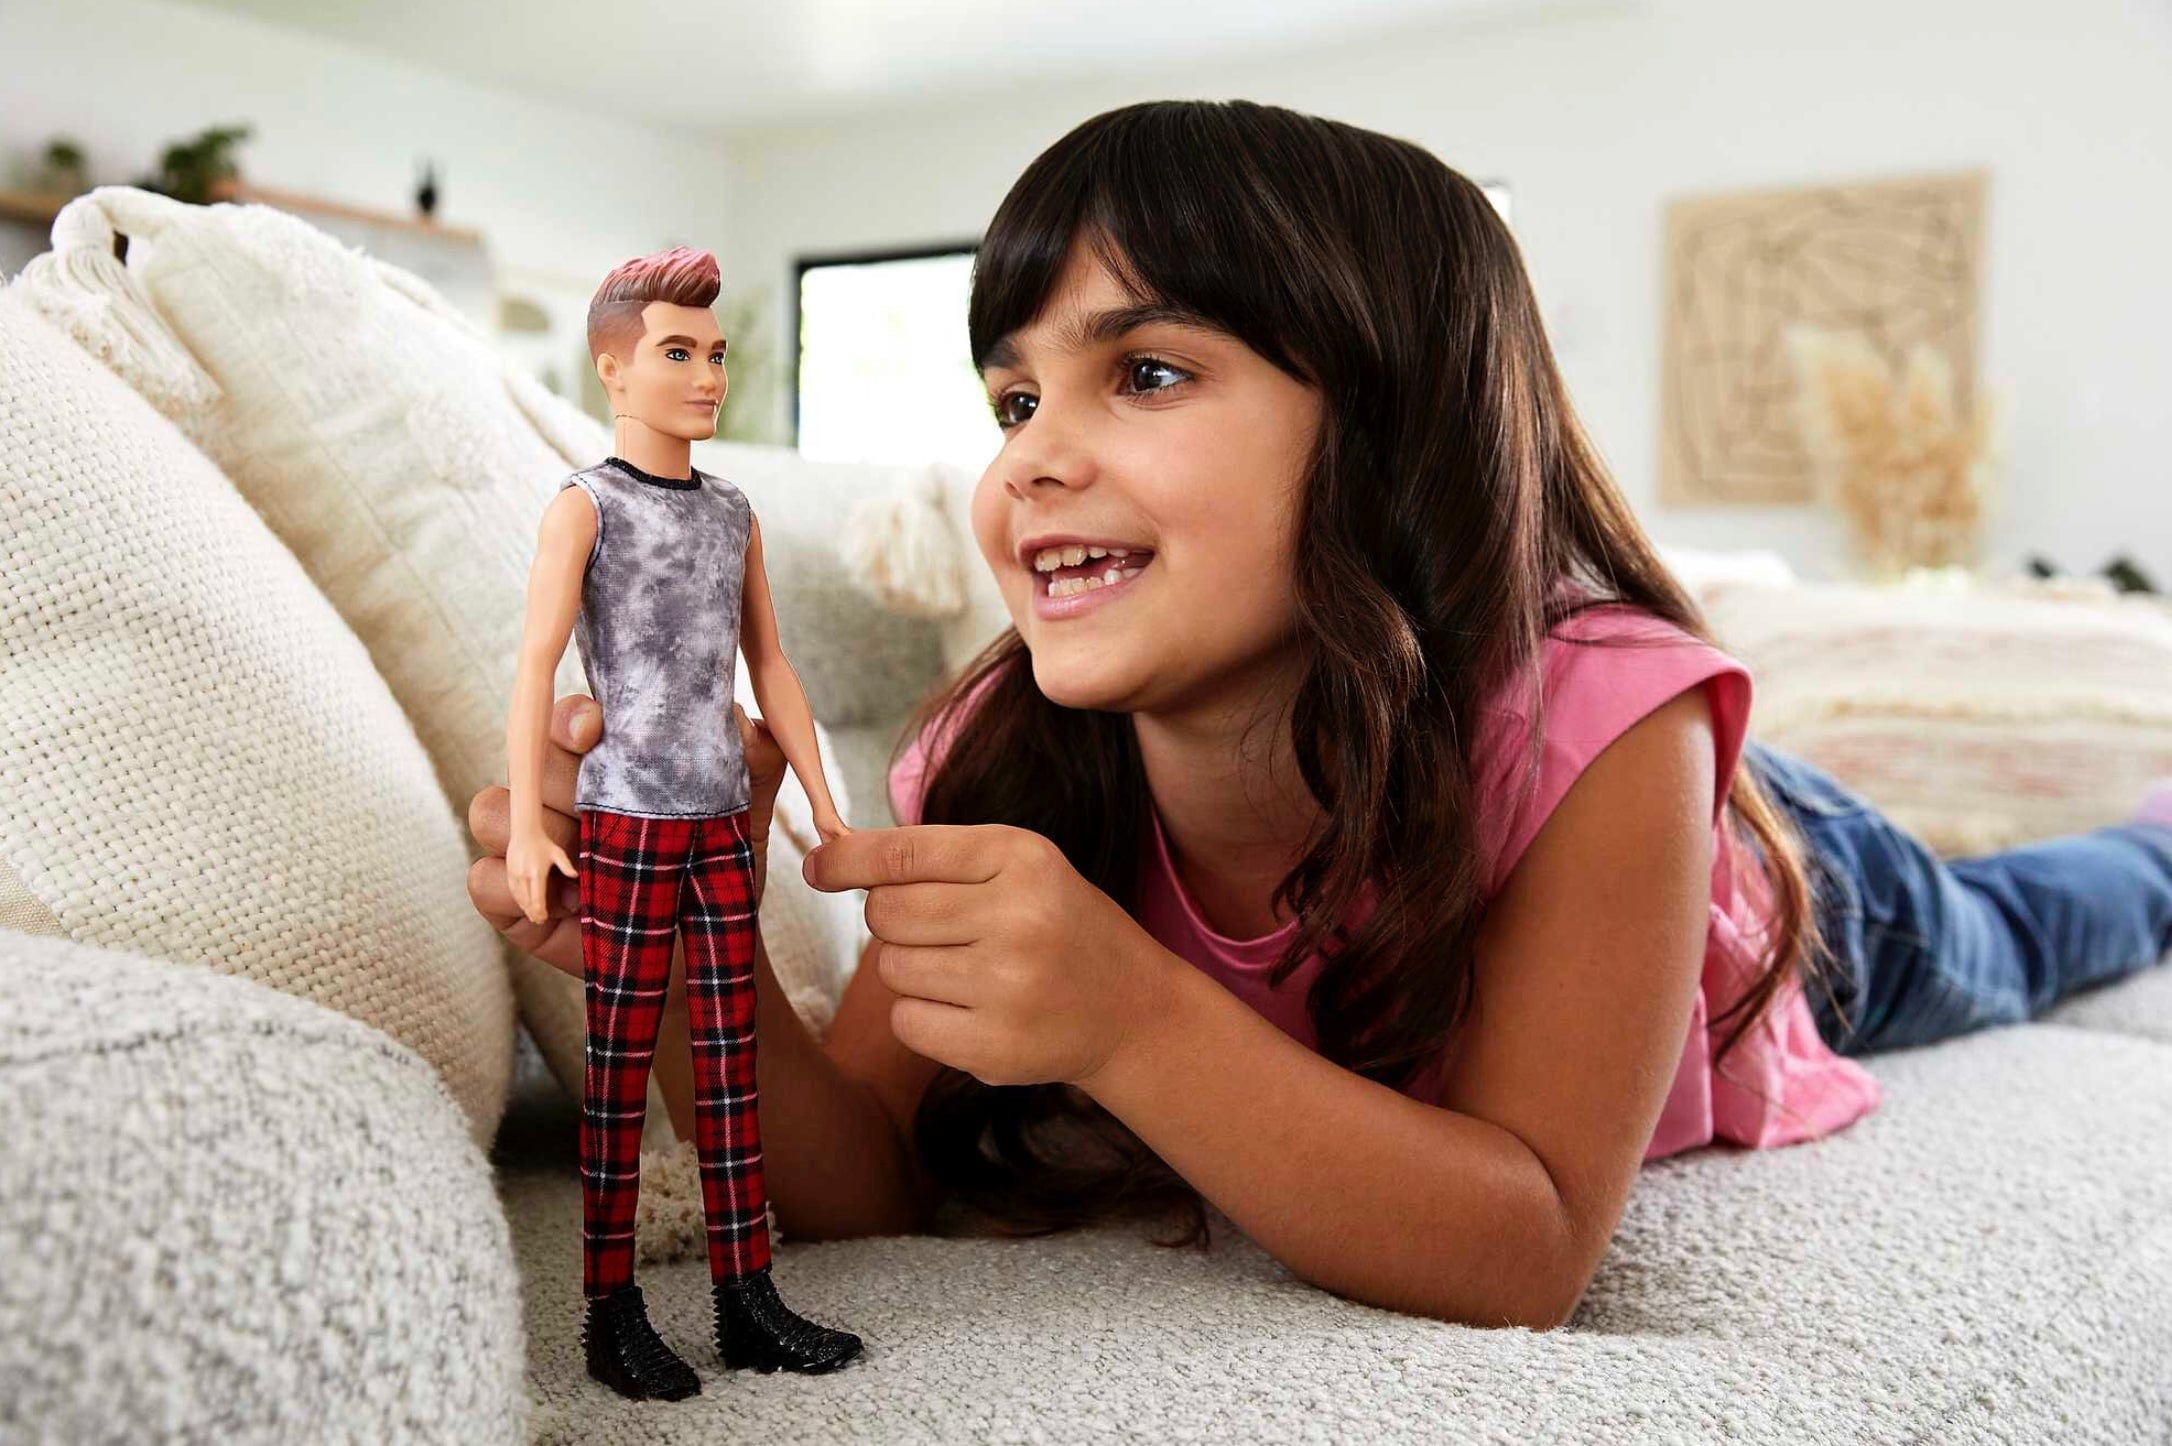 Barbie GVY29 Ken Fashionista Rocker Ken Doll, Multicolor, 32.39 cm*5.08 cm*10.16 cm